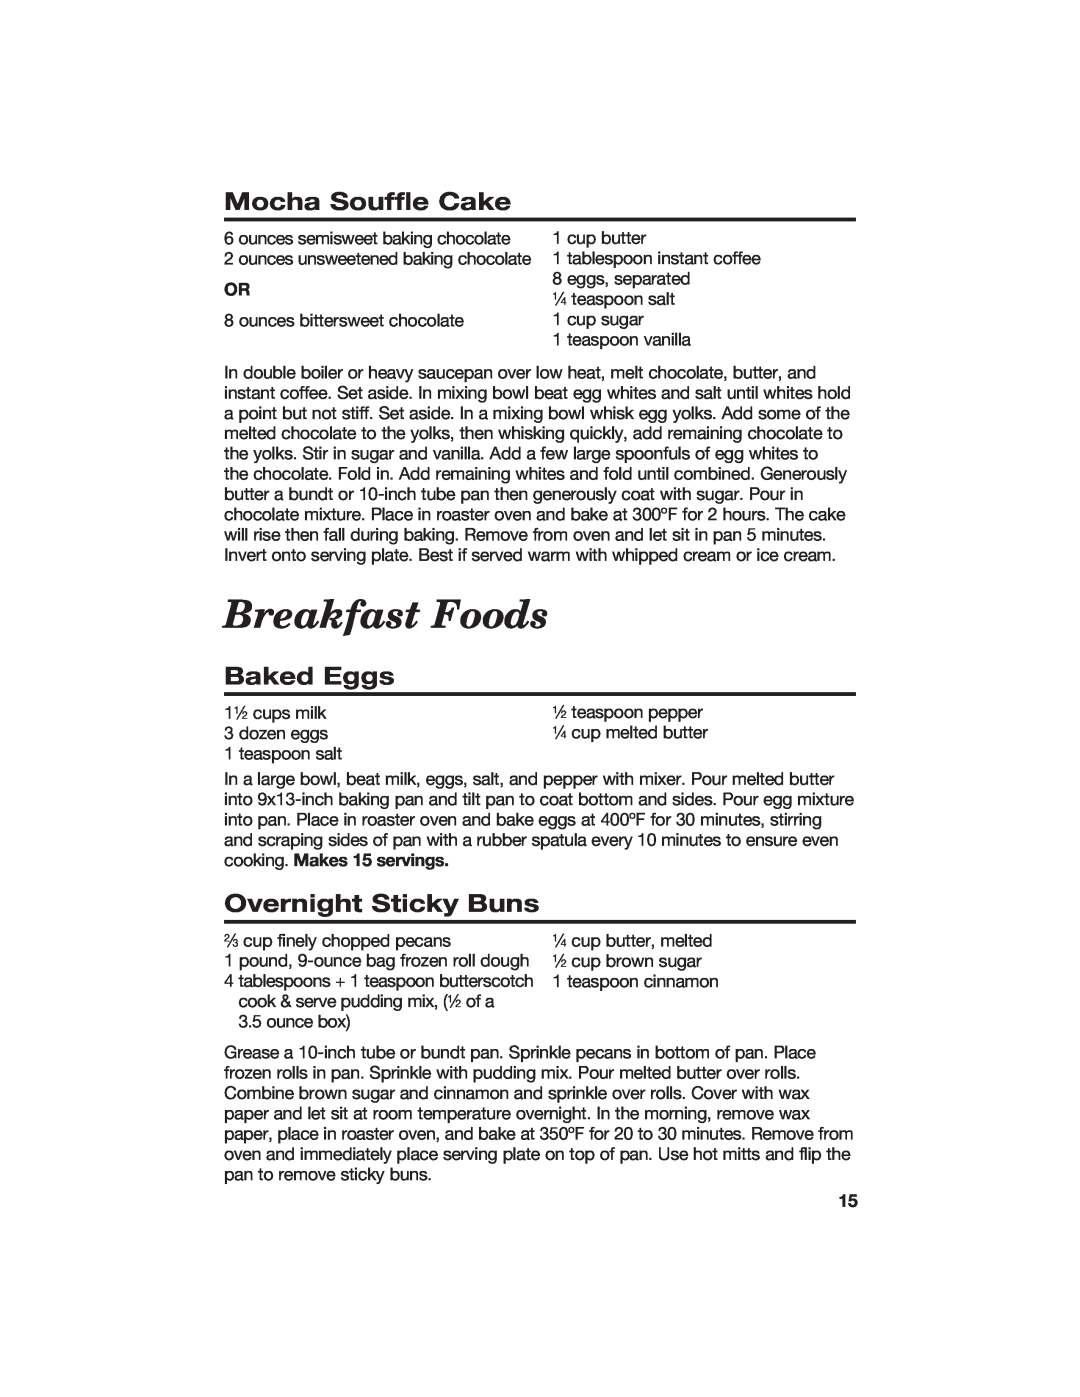 Hamilton Beach 840104300 manual Breakfast Foods, Mocha Souffle Cake, Baked Eggs, Overnight Sticky Buns 